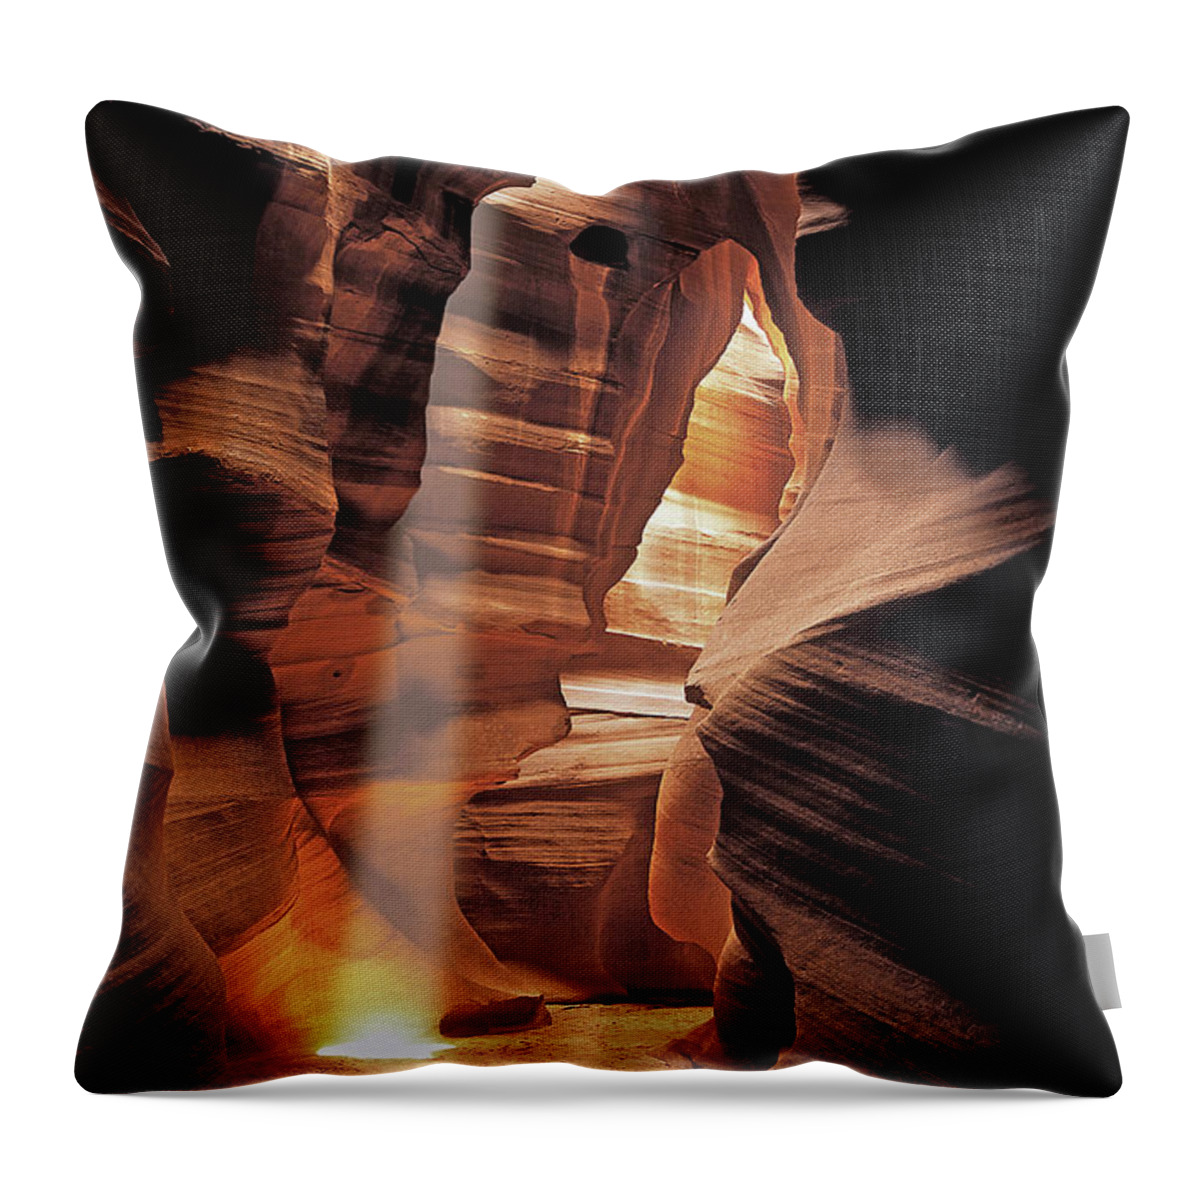 Antelop Canyon Throw Pillow featuring the photograph Antelope Canyon by John Douglas